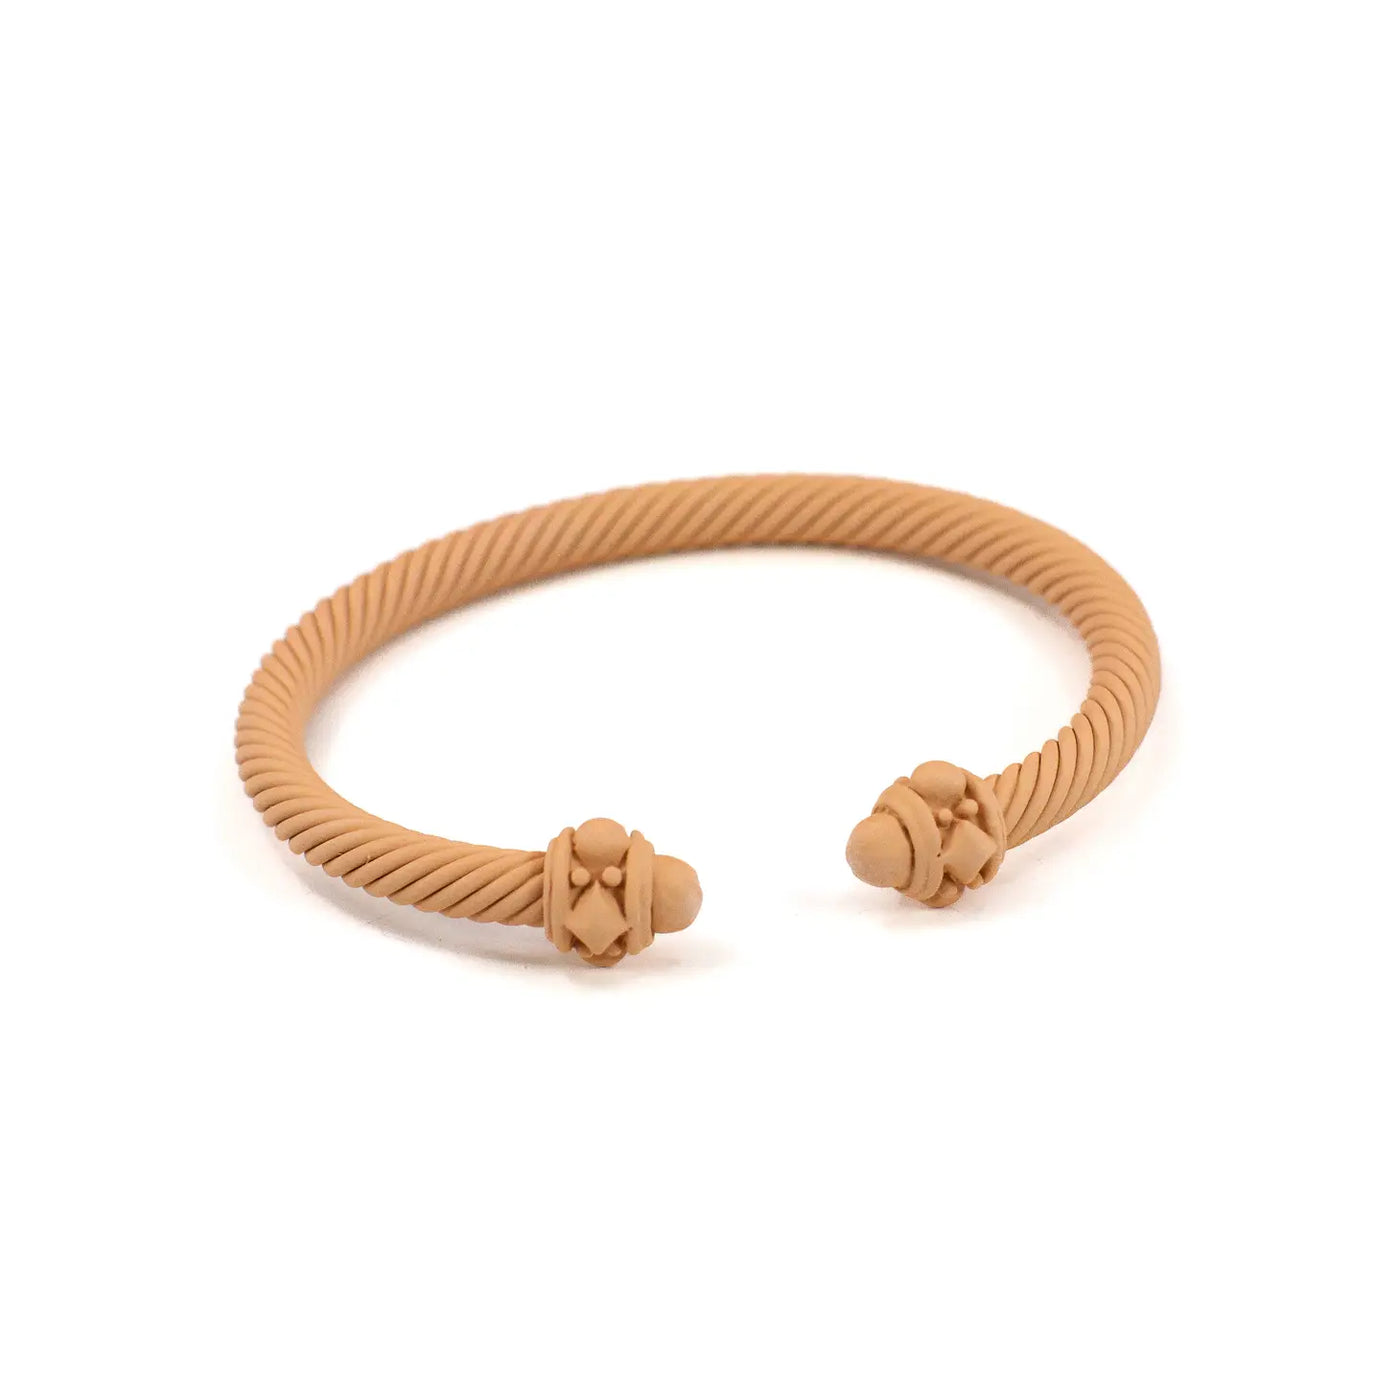 Cable Cuff Bracelet (Carmel)